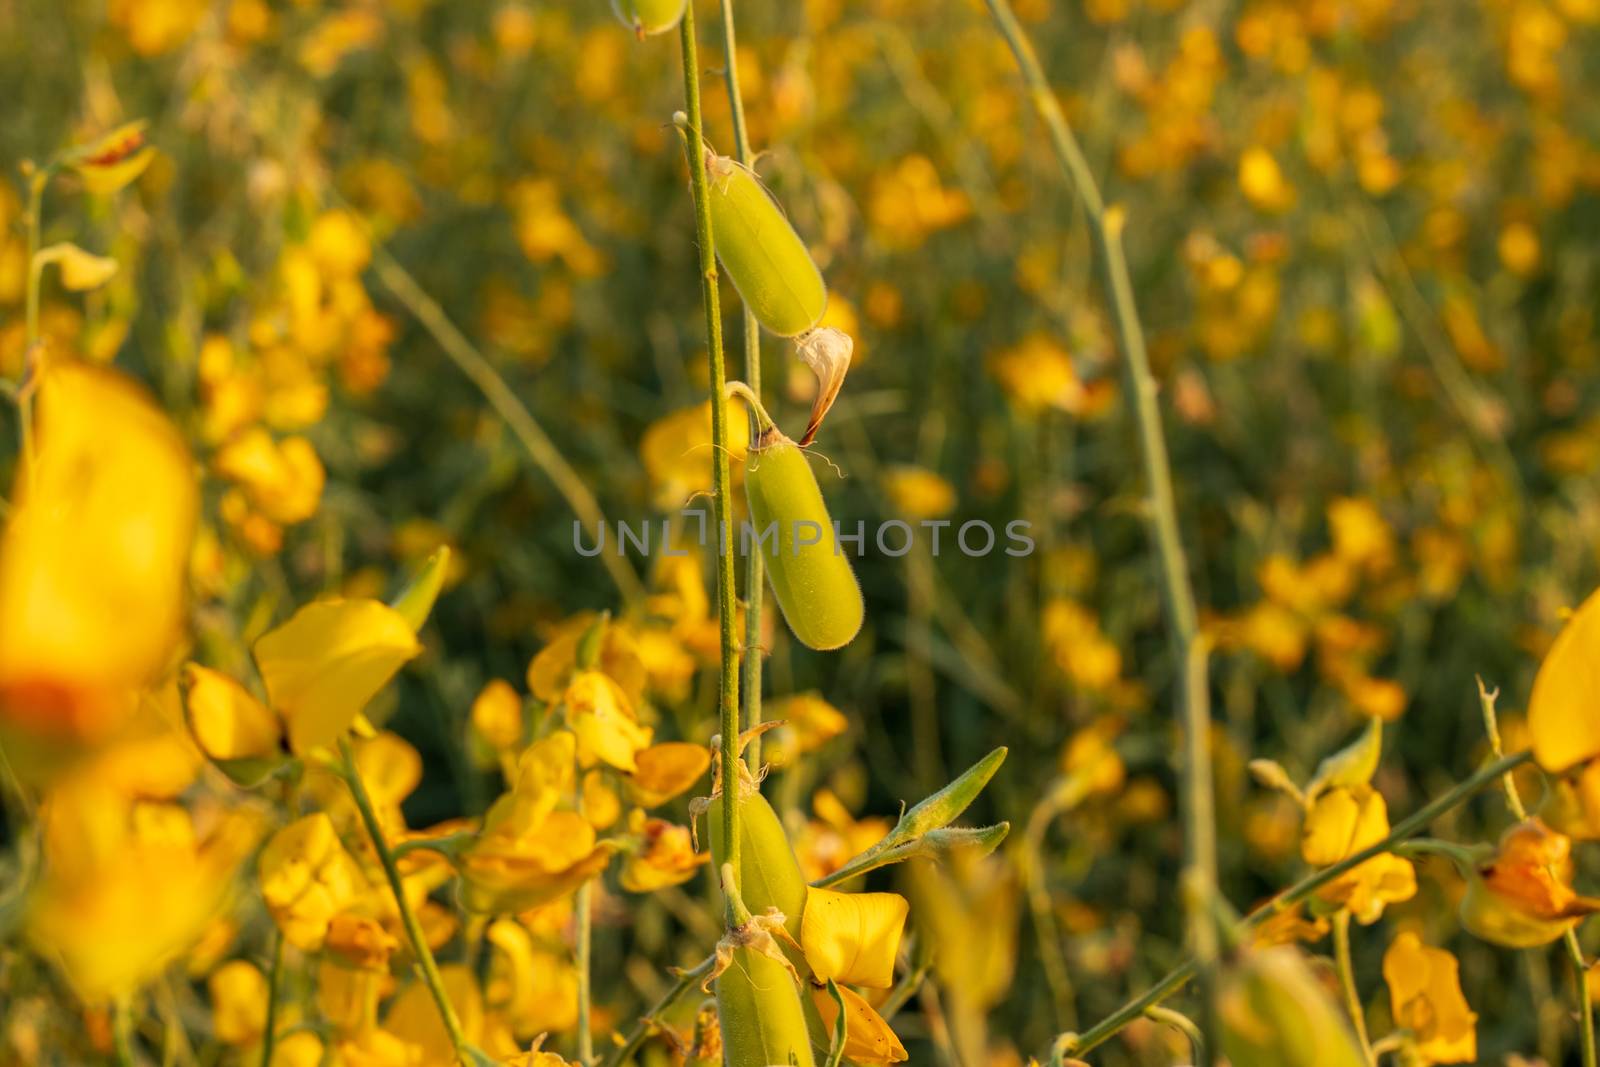 Seed Pods of Sunn hemp, Indian hemp, Madras hemp, Chanvre indien (Crotalaria Juncea)